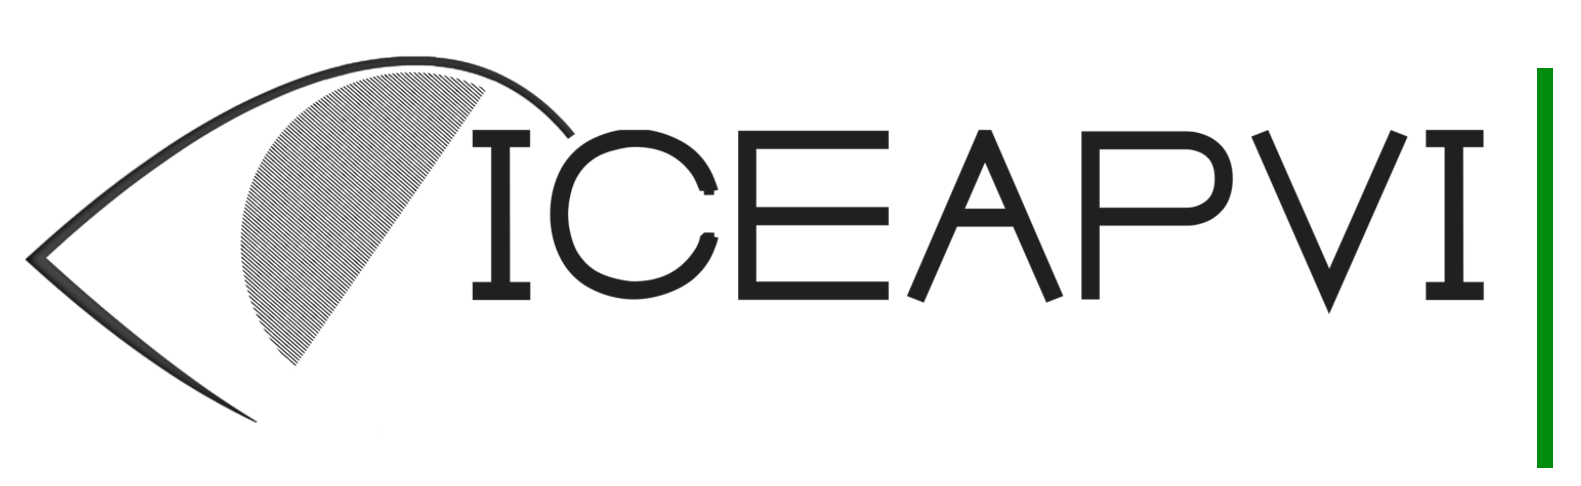 ICEAPVI-2015 logo